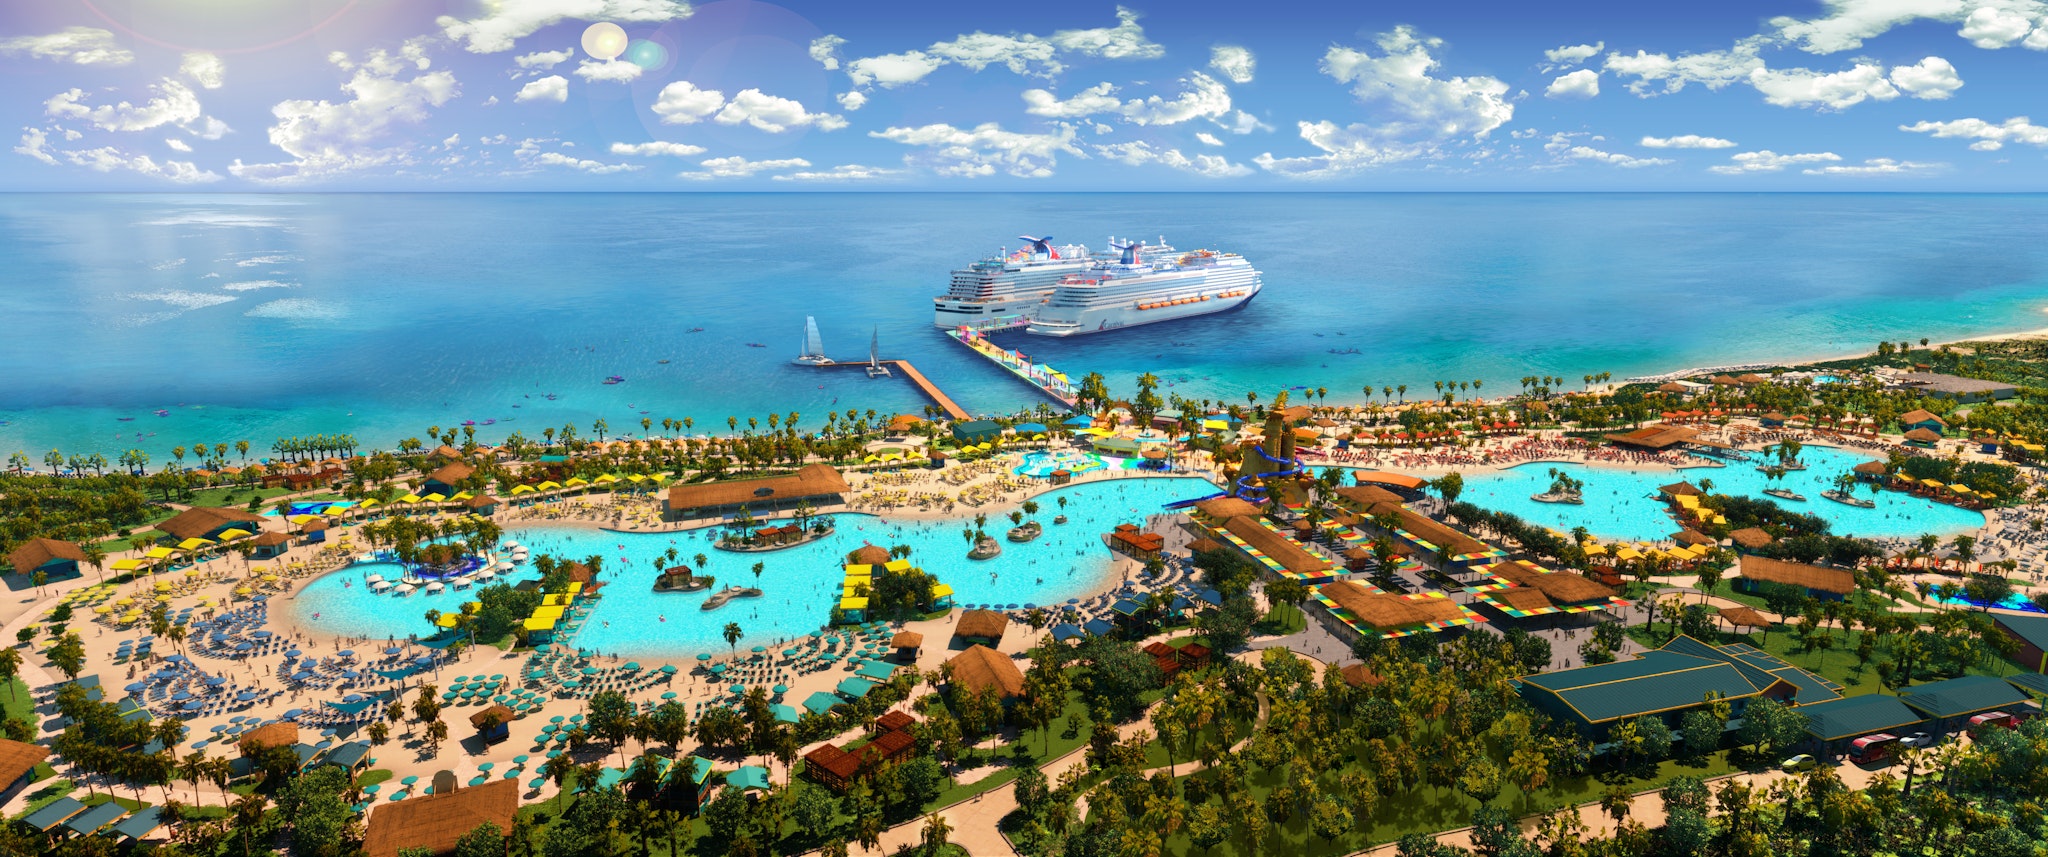 Carnival's Celebration Key will open in 2025 (Photo: Carnival Cruise Line)